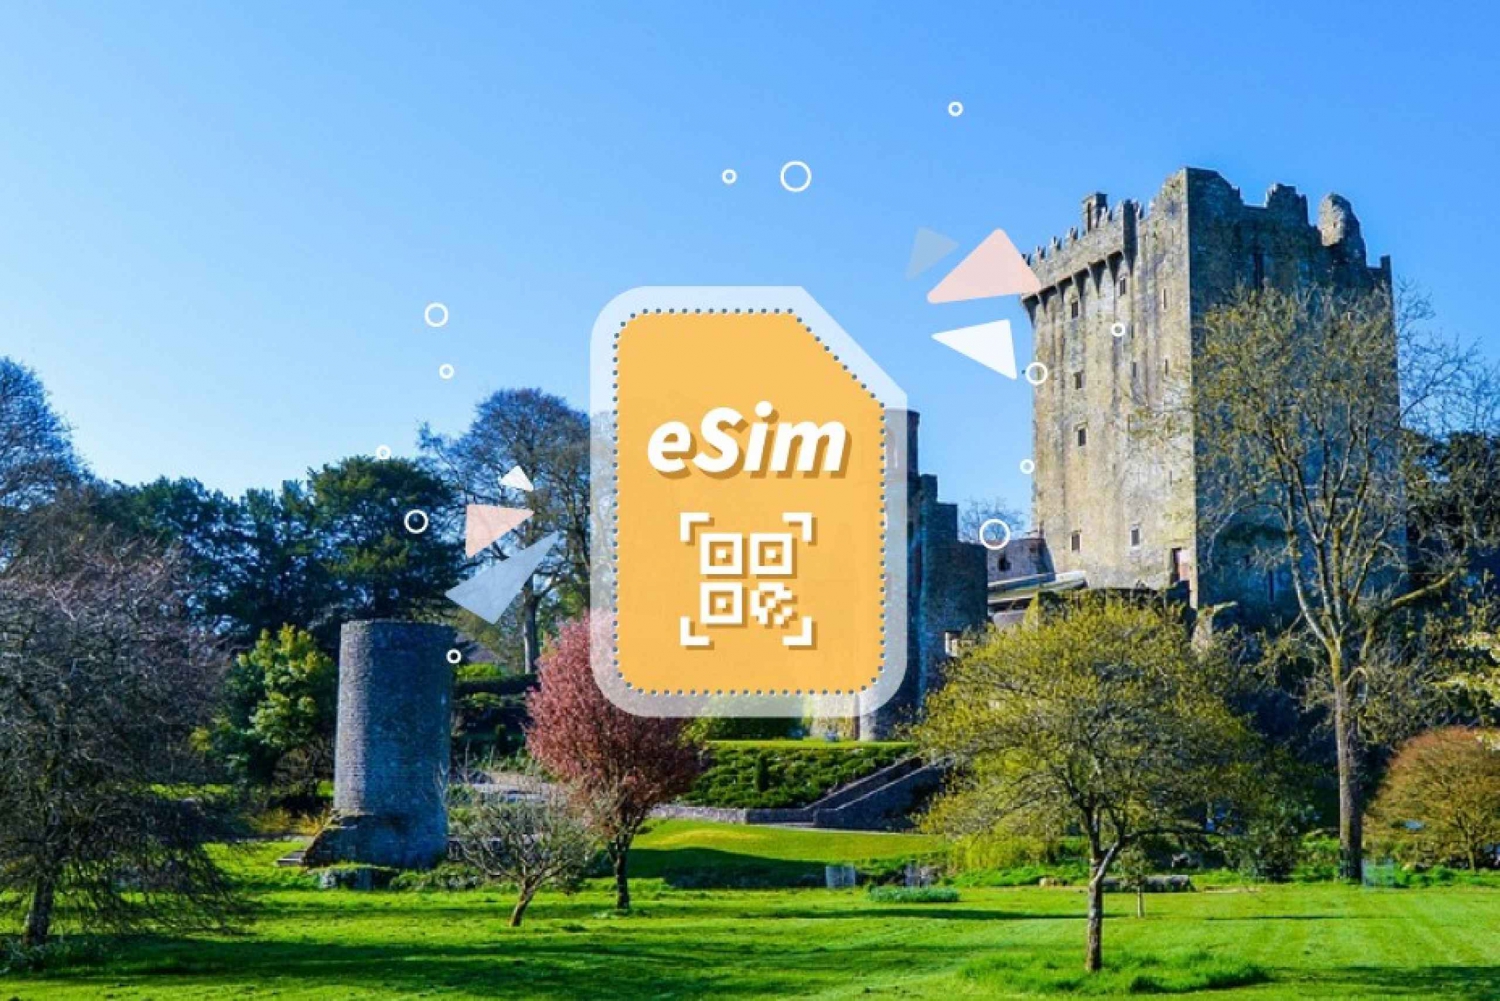 Irlanda/Europa: Plan de datos móviles eSim